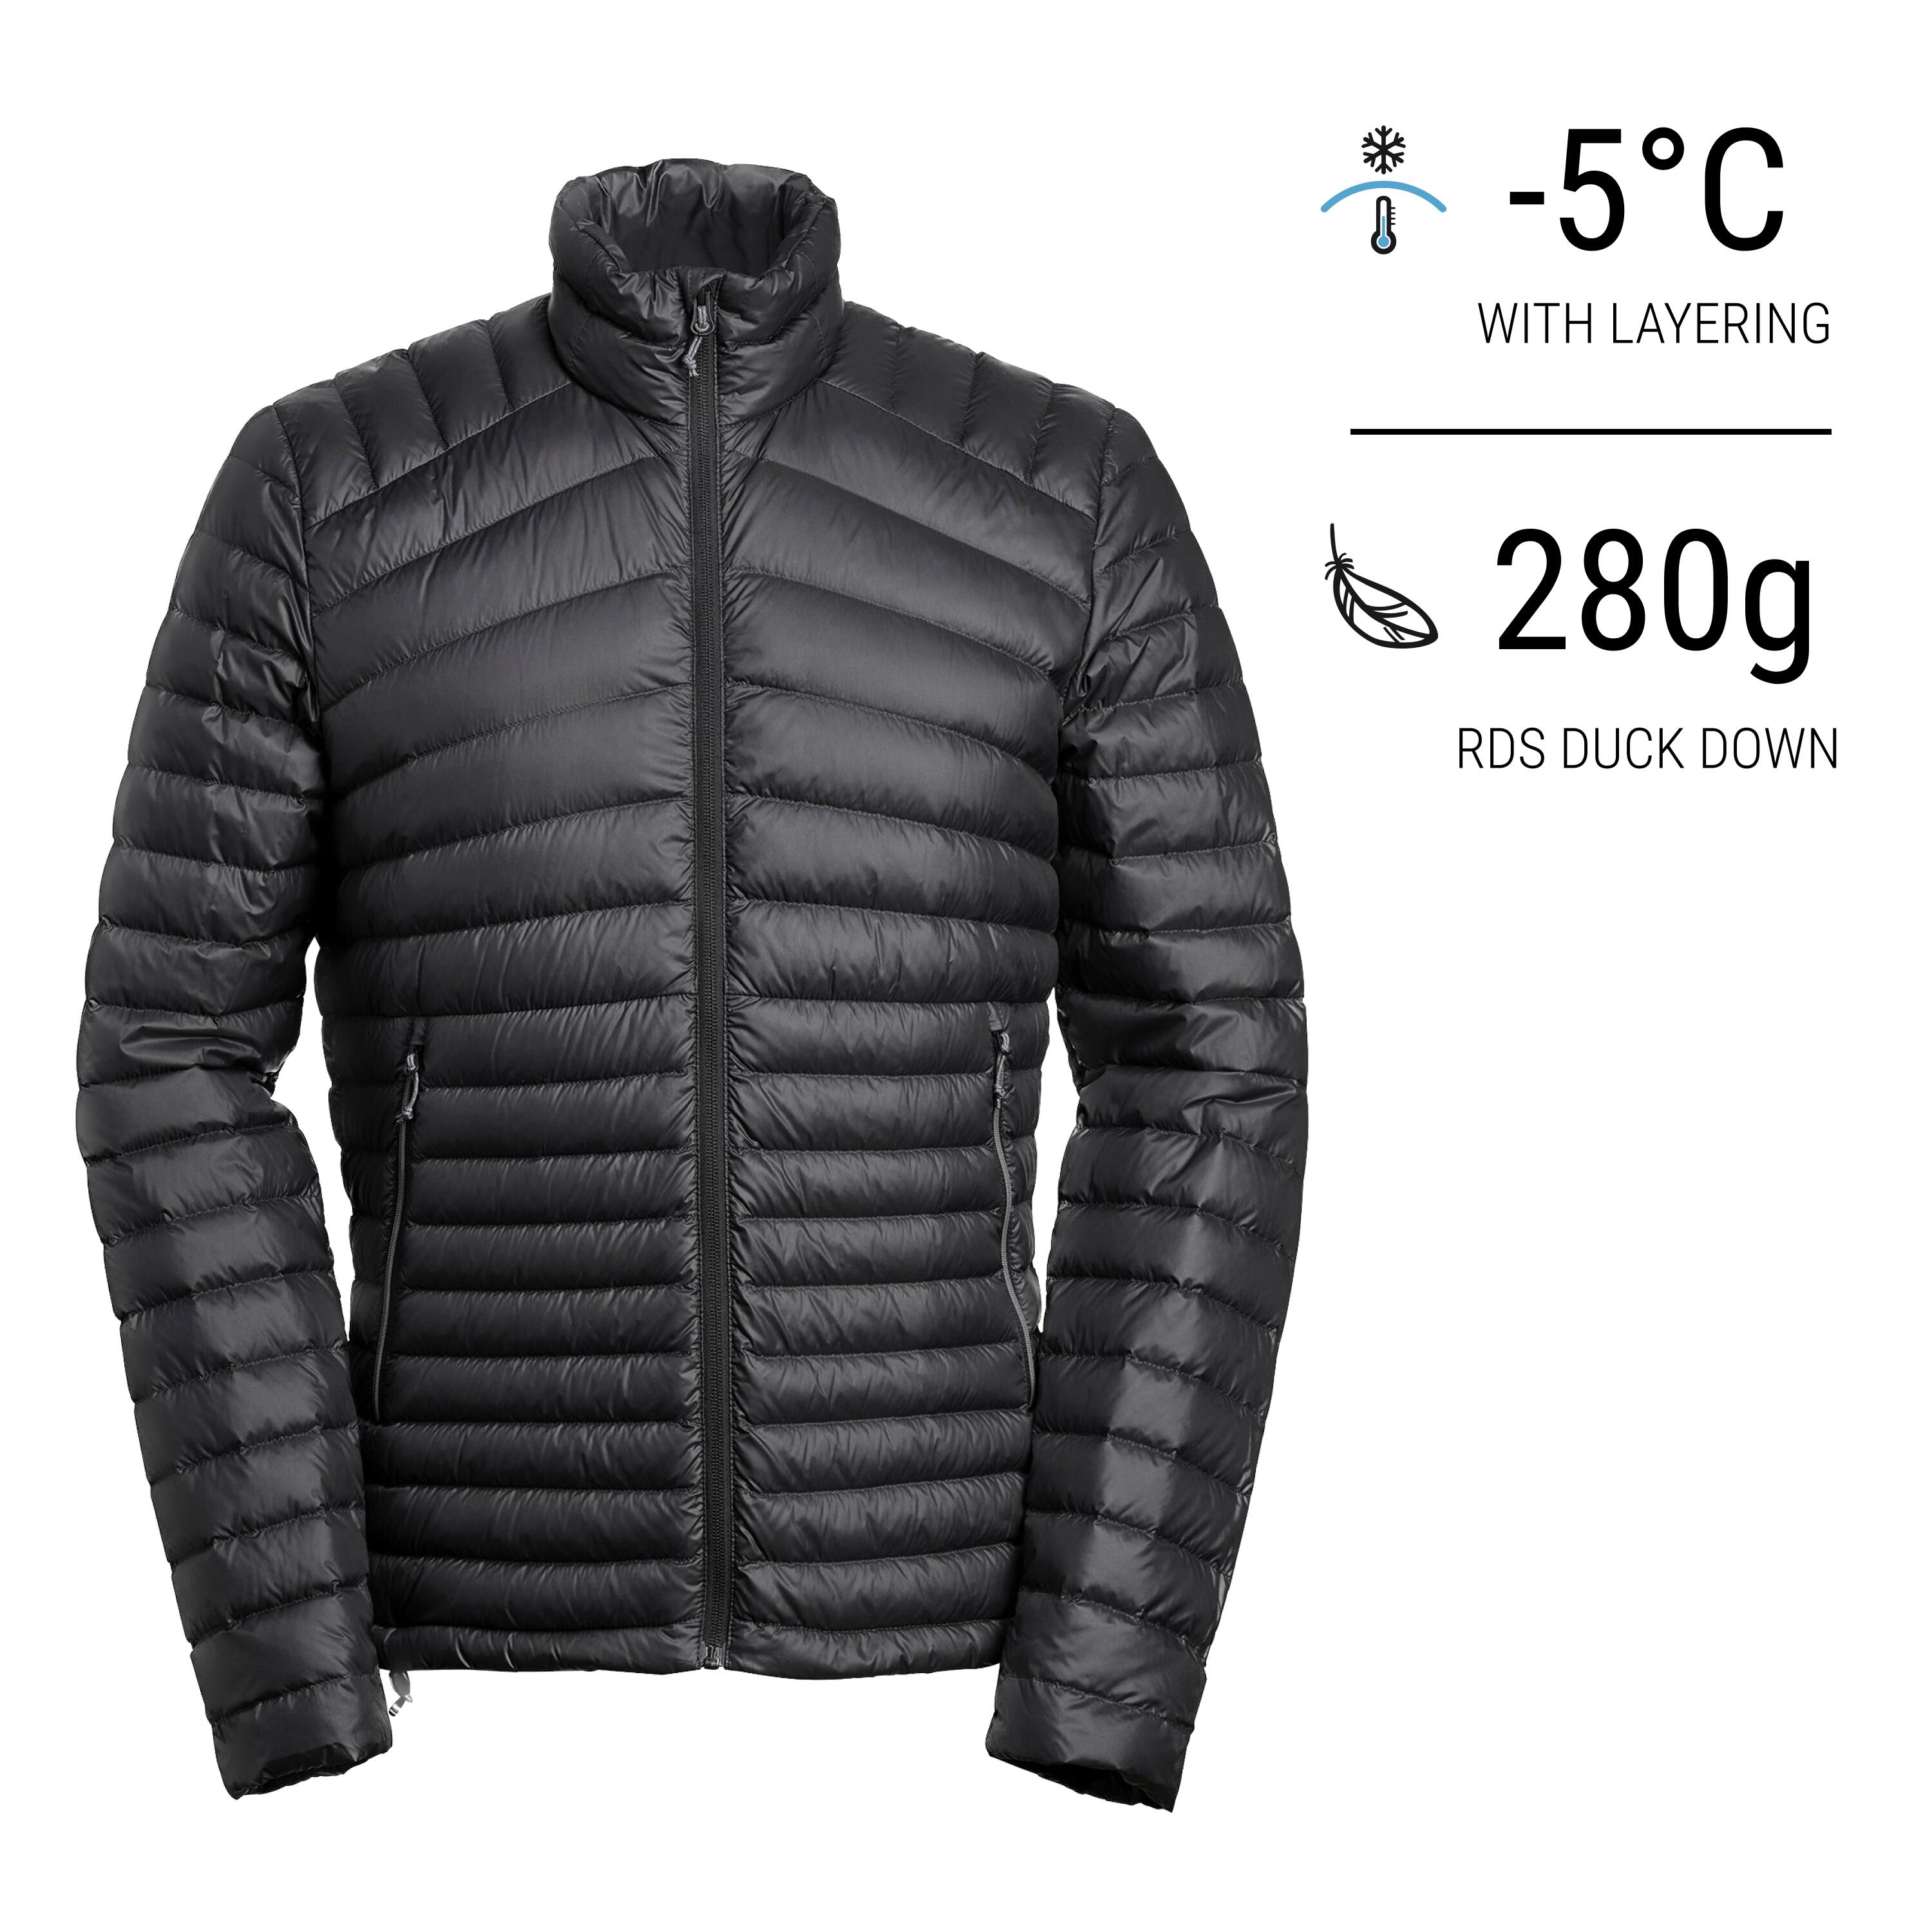 Buy WoMen's Trekking Padded Jacket Hooded 5°C Online | Decathlon